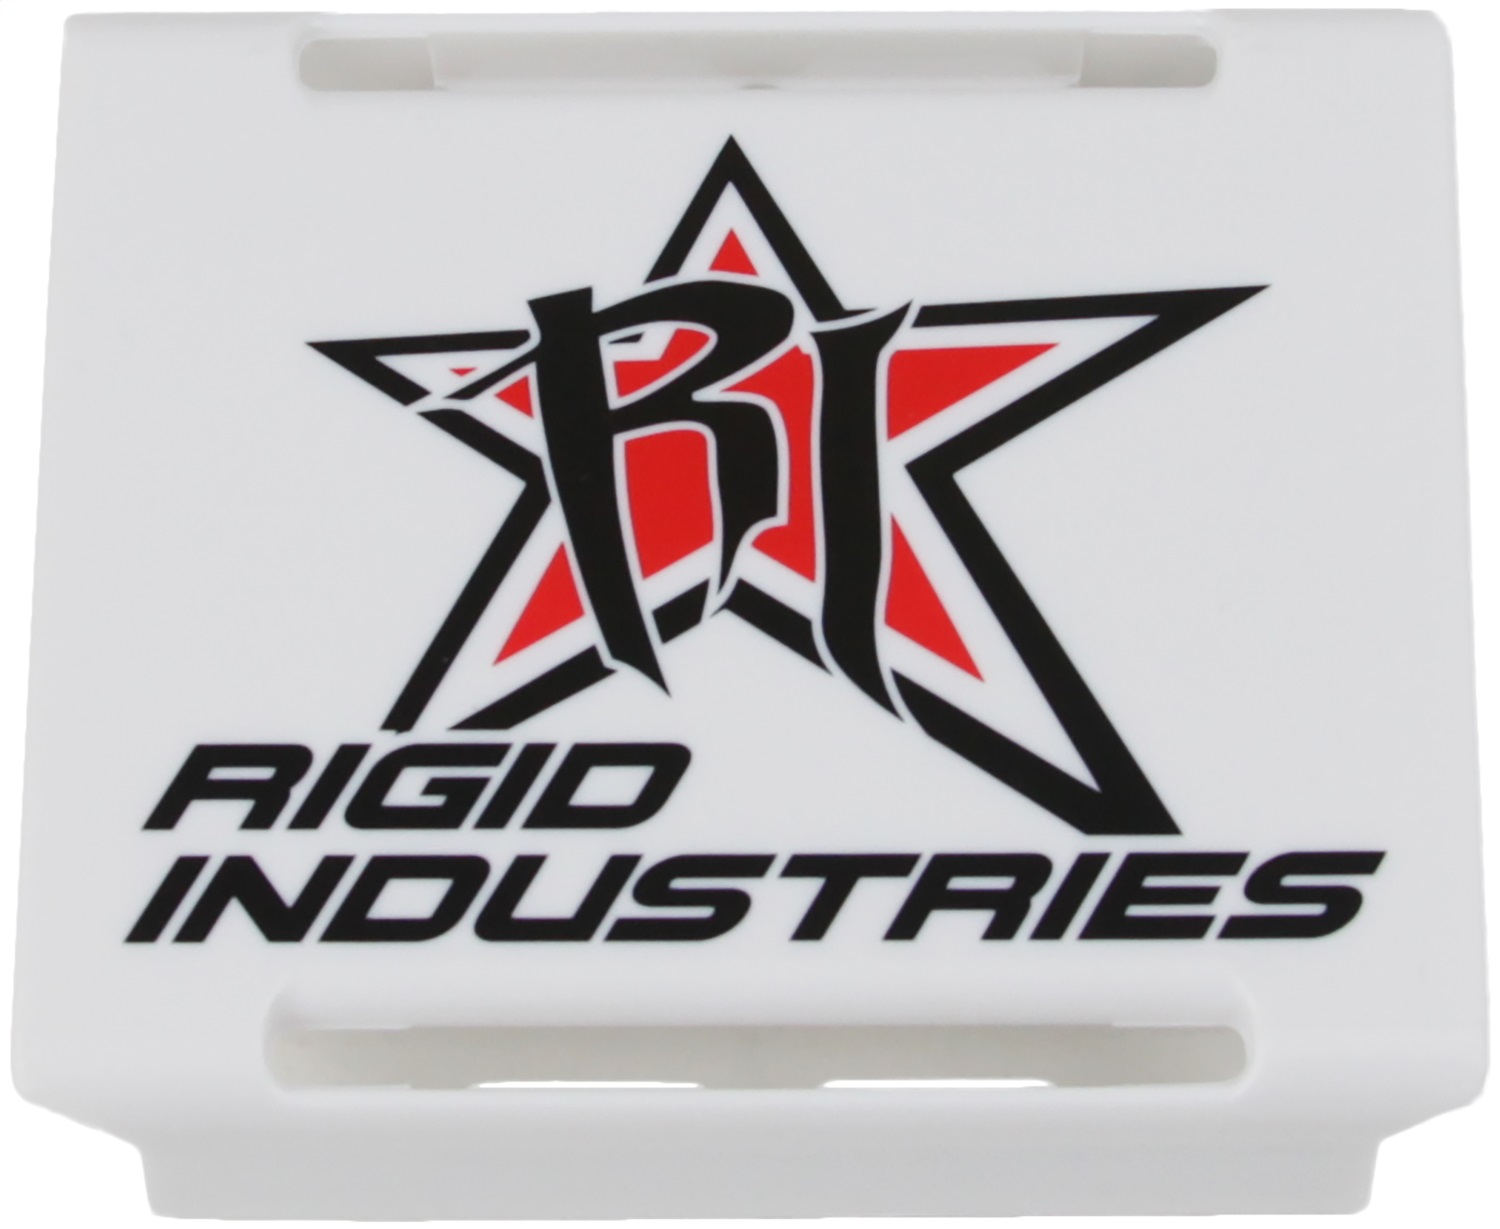 Rigid Industries Rigid Industries 10496 EM Series; Light Cover